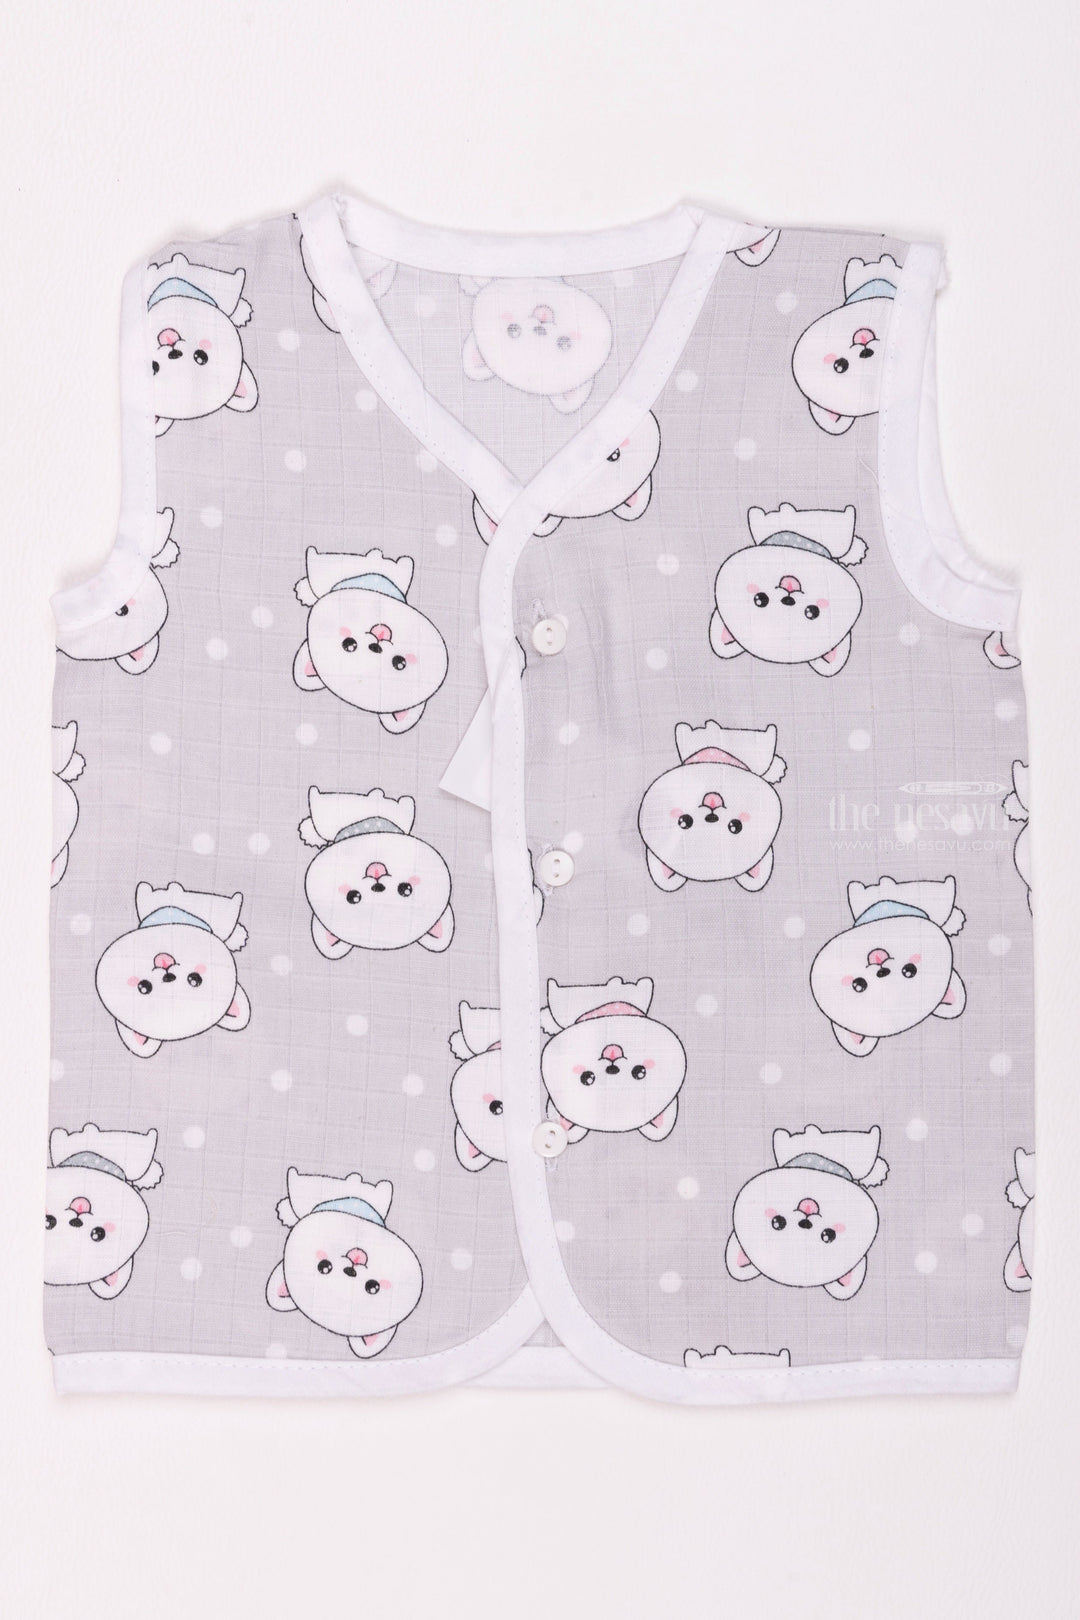 The Nesavu Baby Jhables Gray Cotton Jhabla Cute Animal Theme for Newborns Nesavu 12 (3M) / Gray / Muslin Cotton IF005B-12 Baby Clothing Online |Born Dresses For babys | The Nesavu